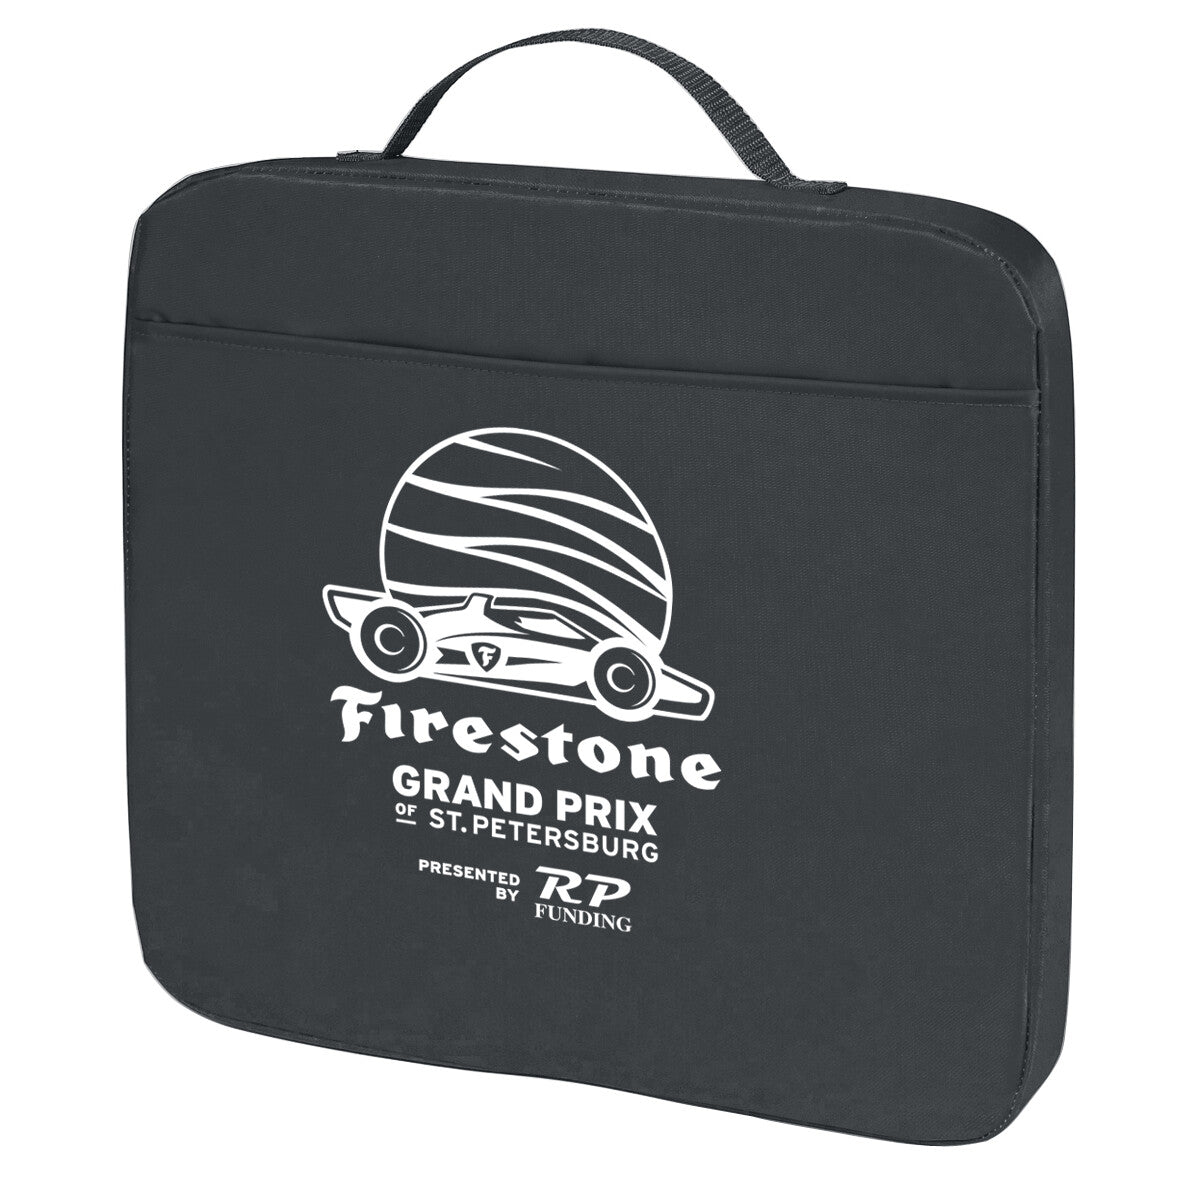 Firestone Grand Prix of St Pete Seat Cushion